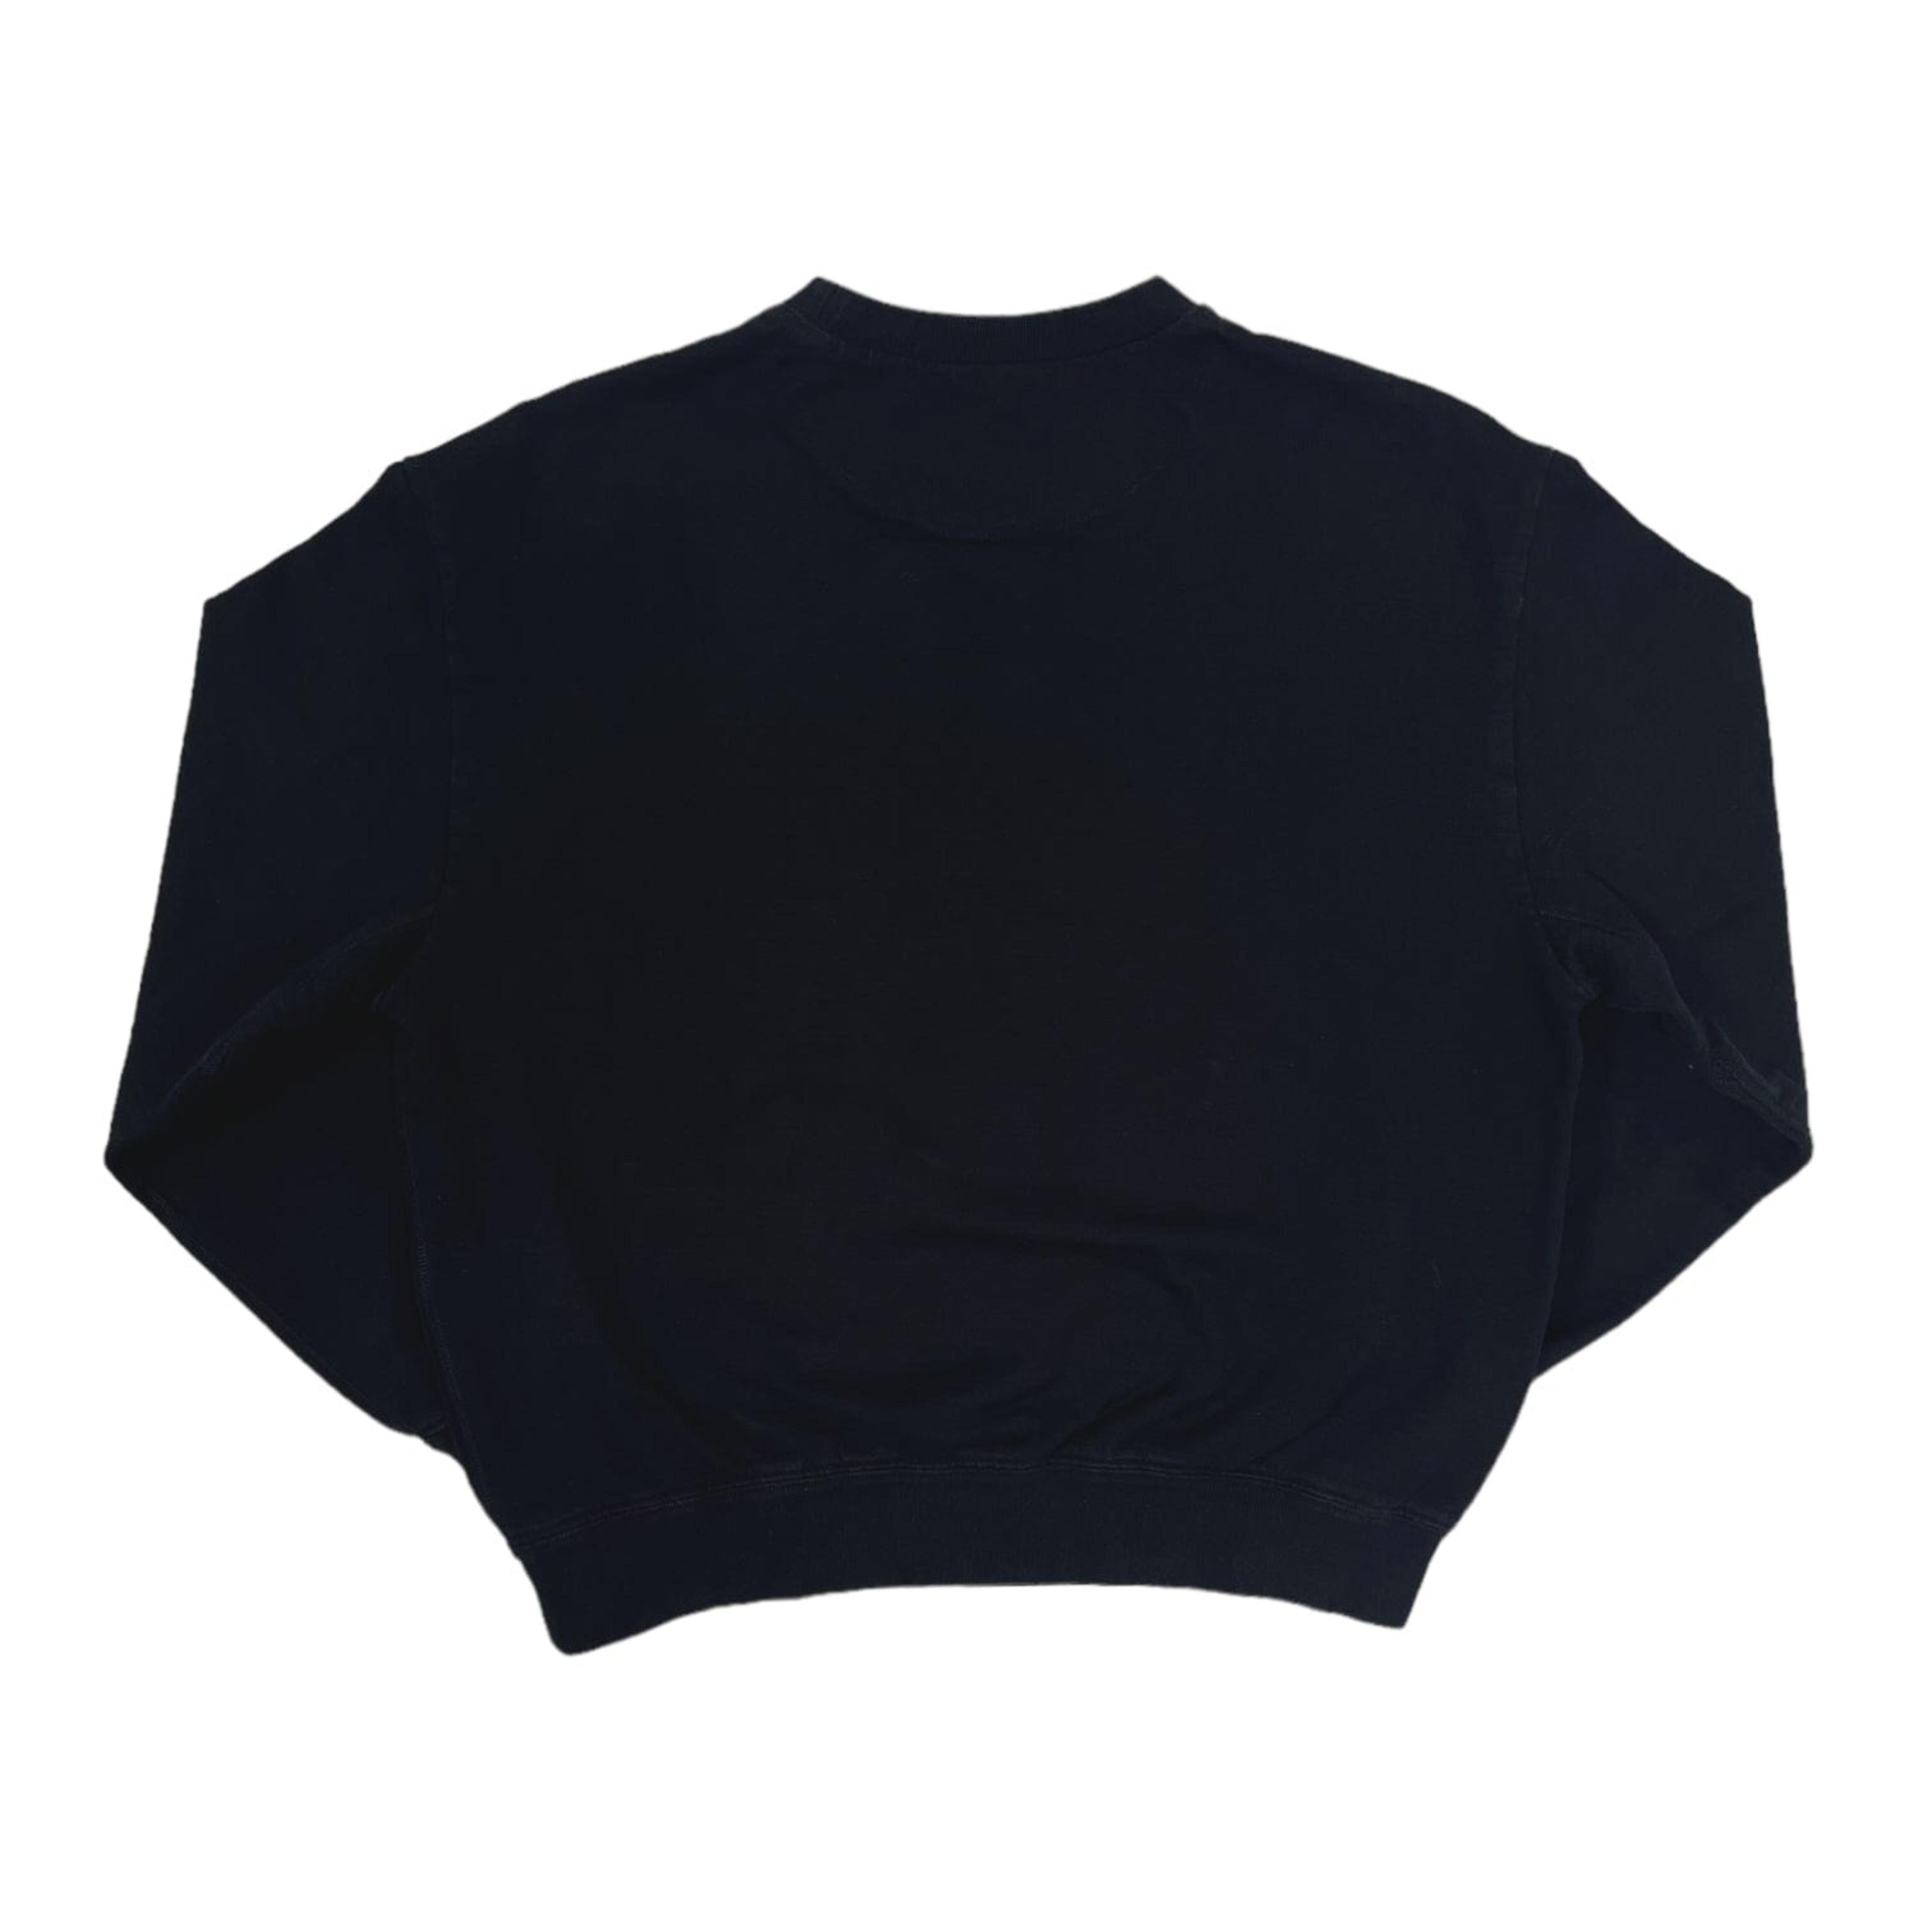 Alternate View 1 of Prada Knitted Logo Crewneck Sweatshirt Black Pre-Owned